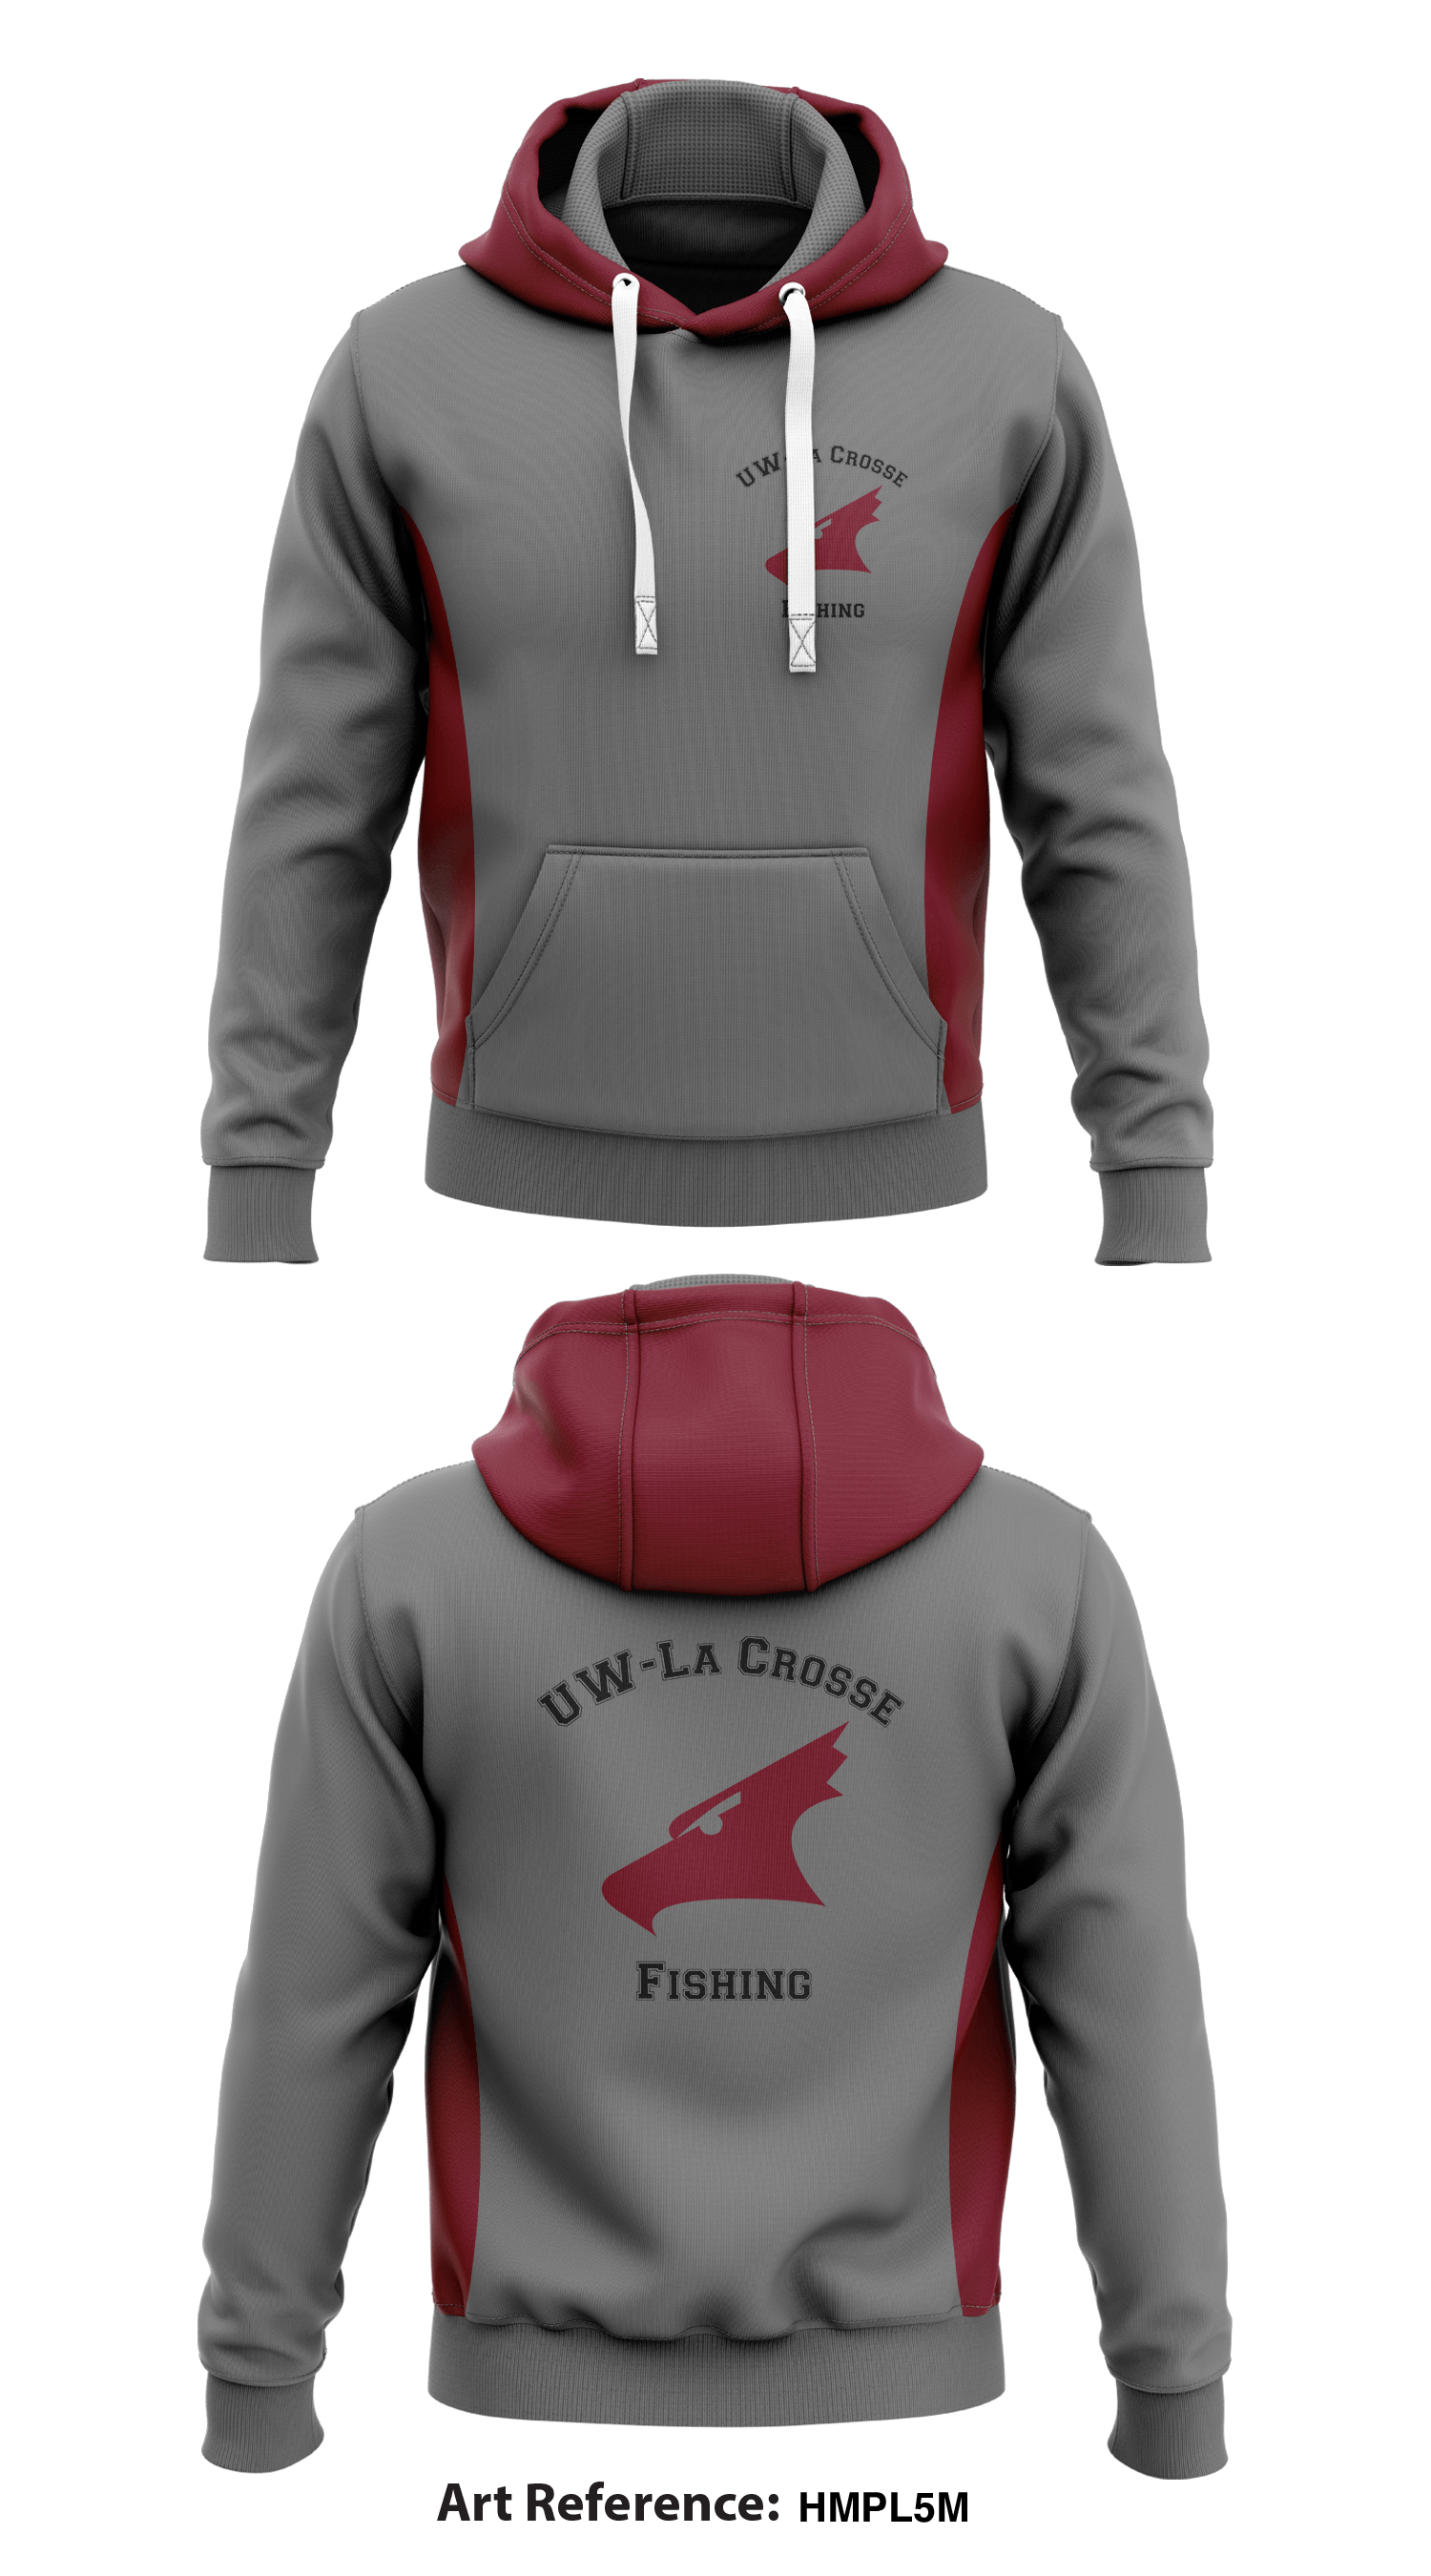 UW-La Crosse Fishing Store 1 Core Men's Hooded Performance Sweatshirt - hMPL5m 2XL